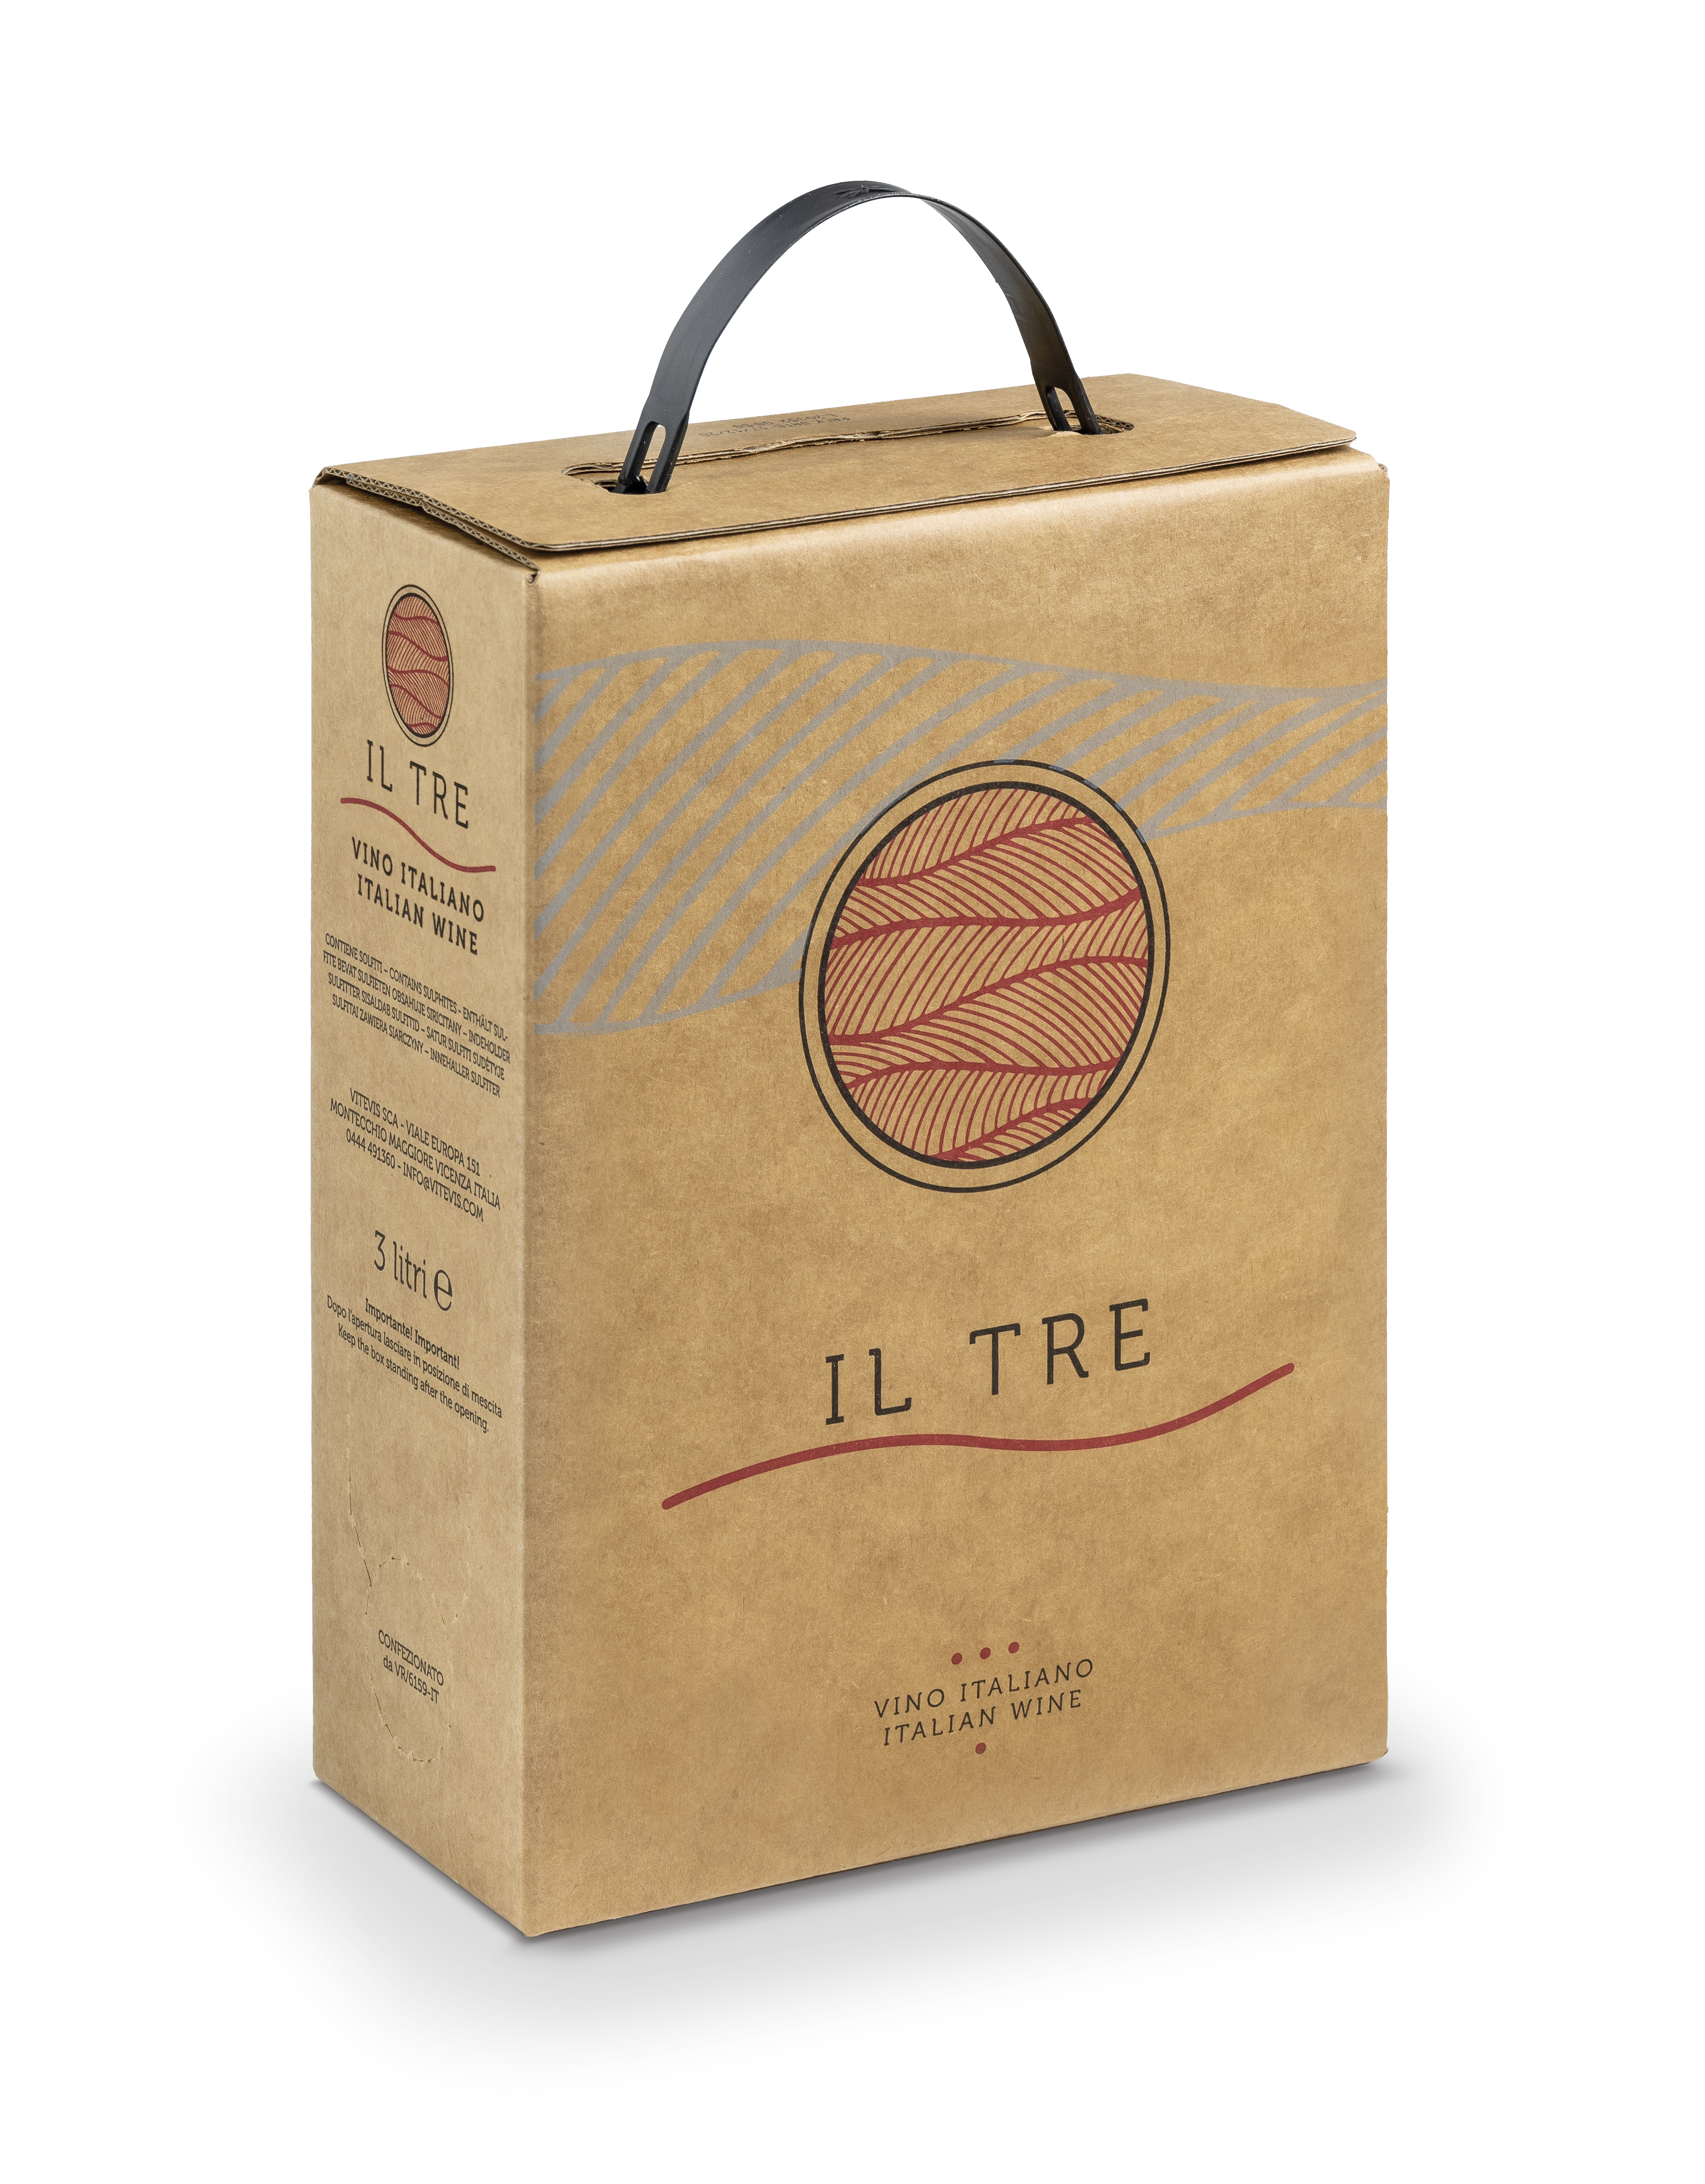 Červené víno, bag in box, 100% Merlot, Il Tre, Veneto, Cantine Vitevis, 3litry 12%